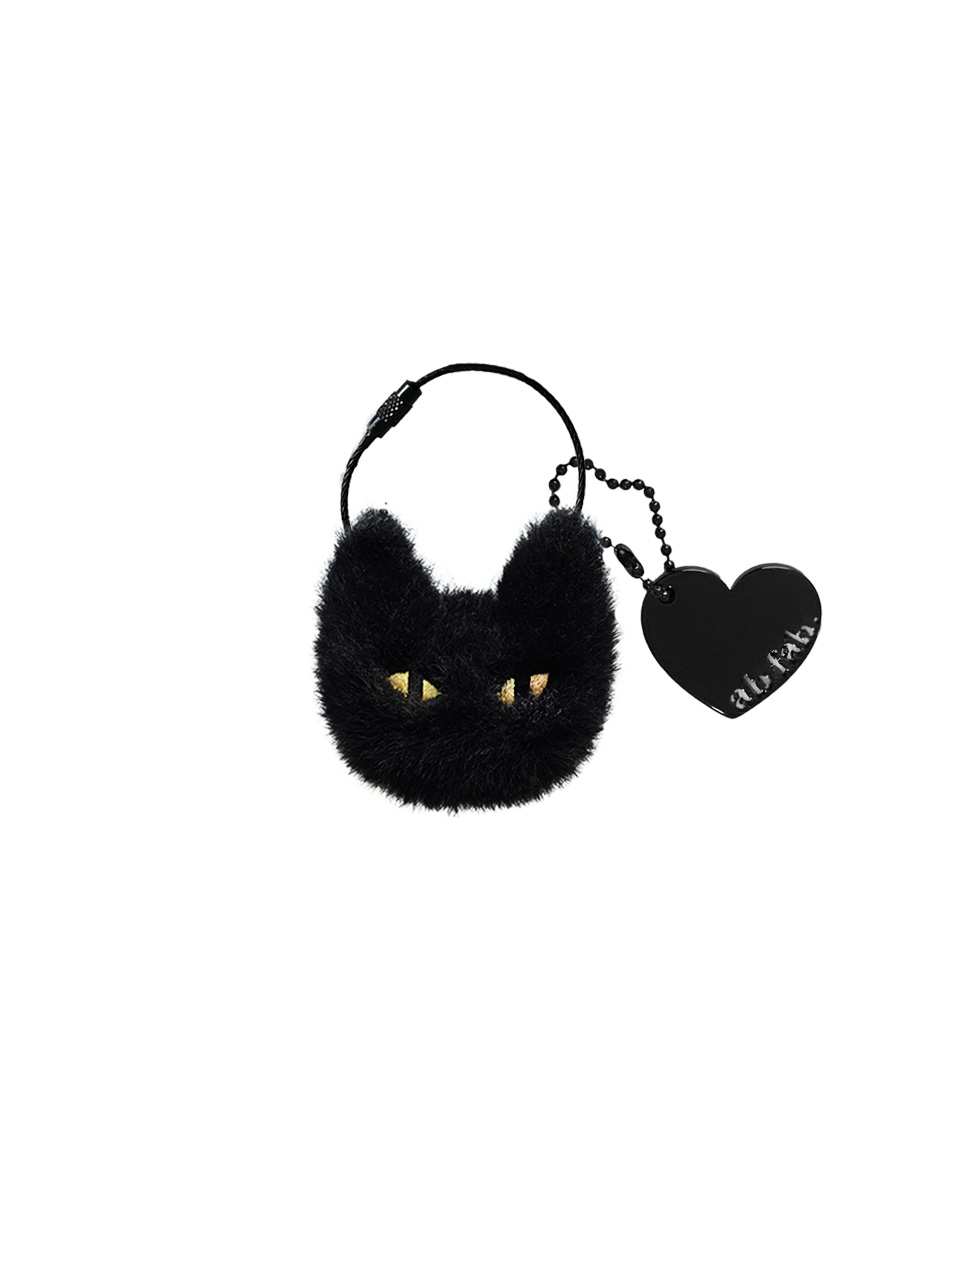 myam-mi key ring ( Black cat )